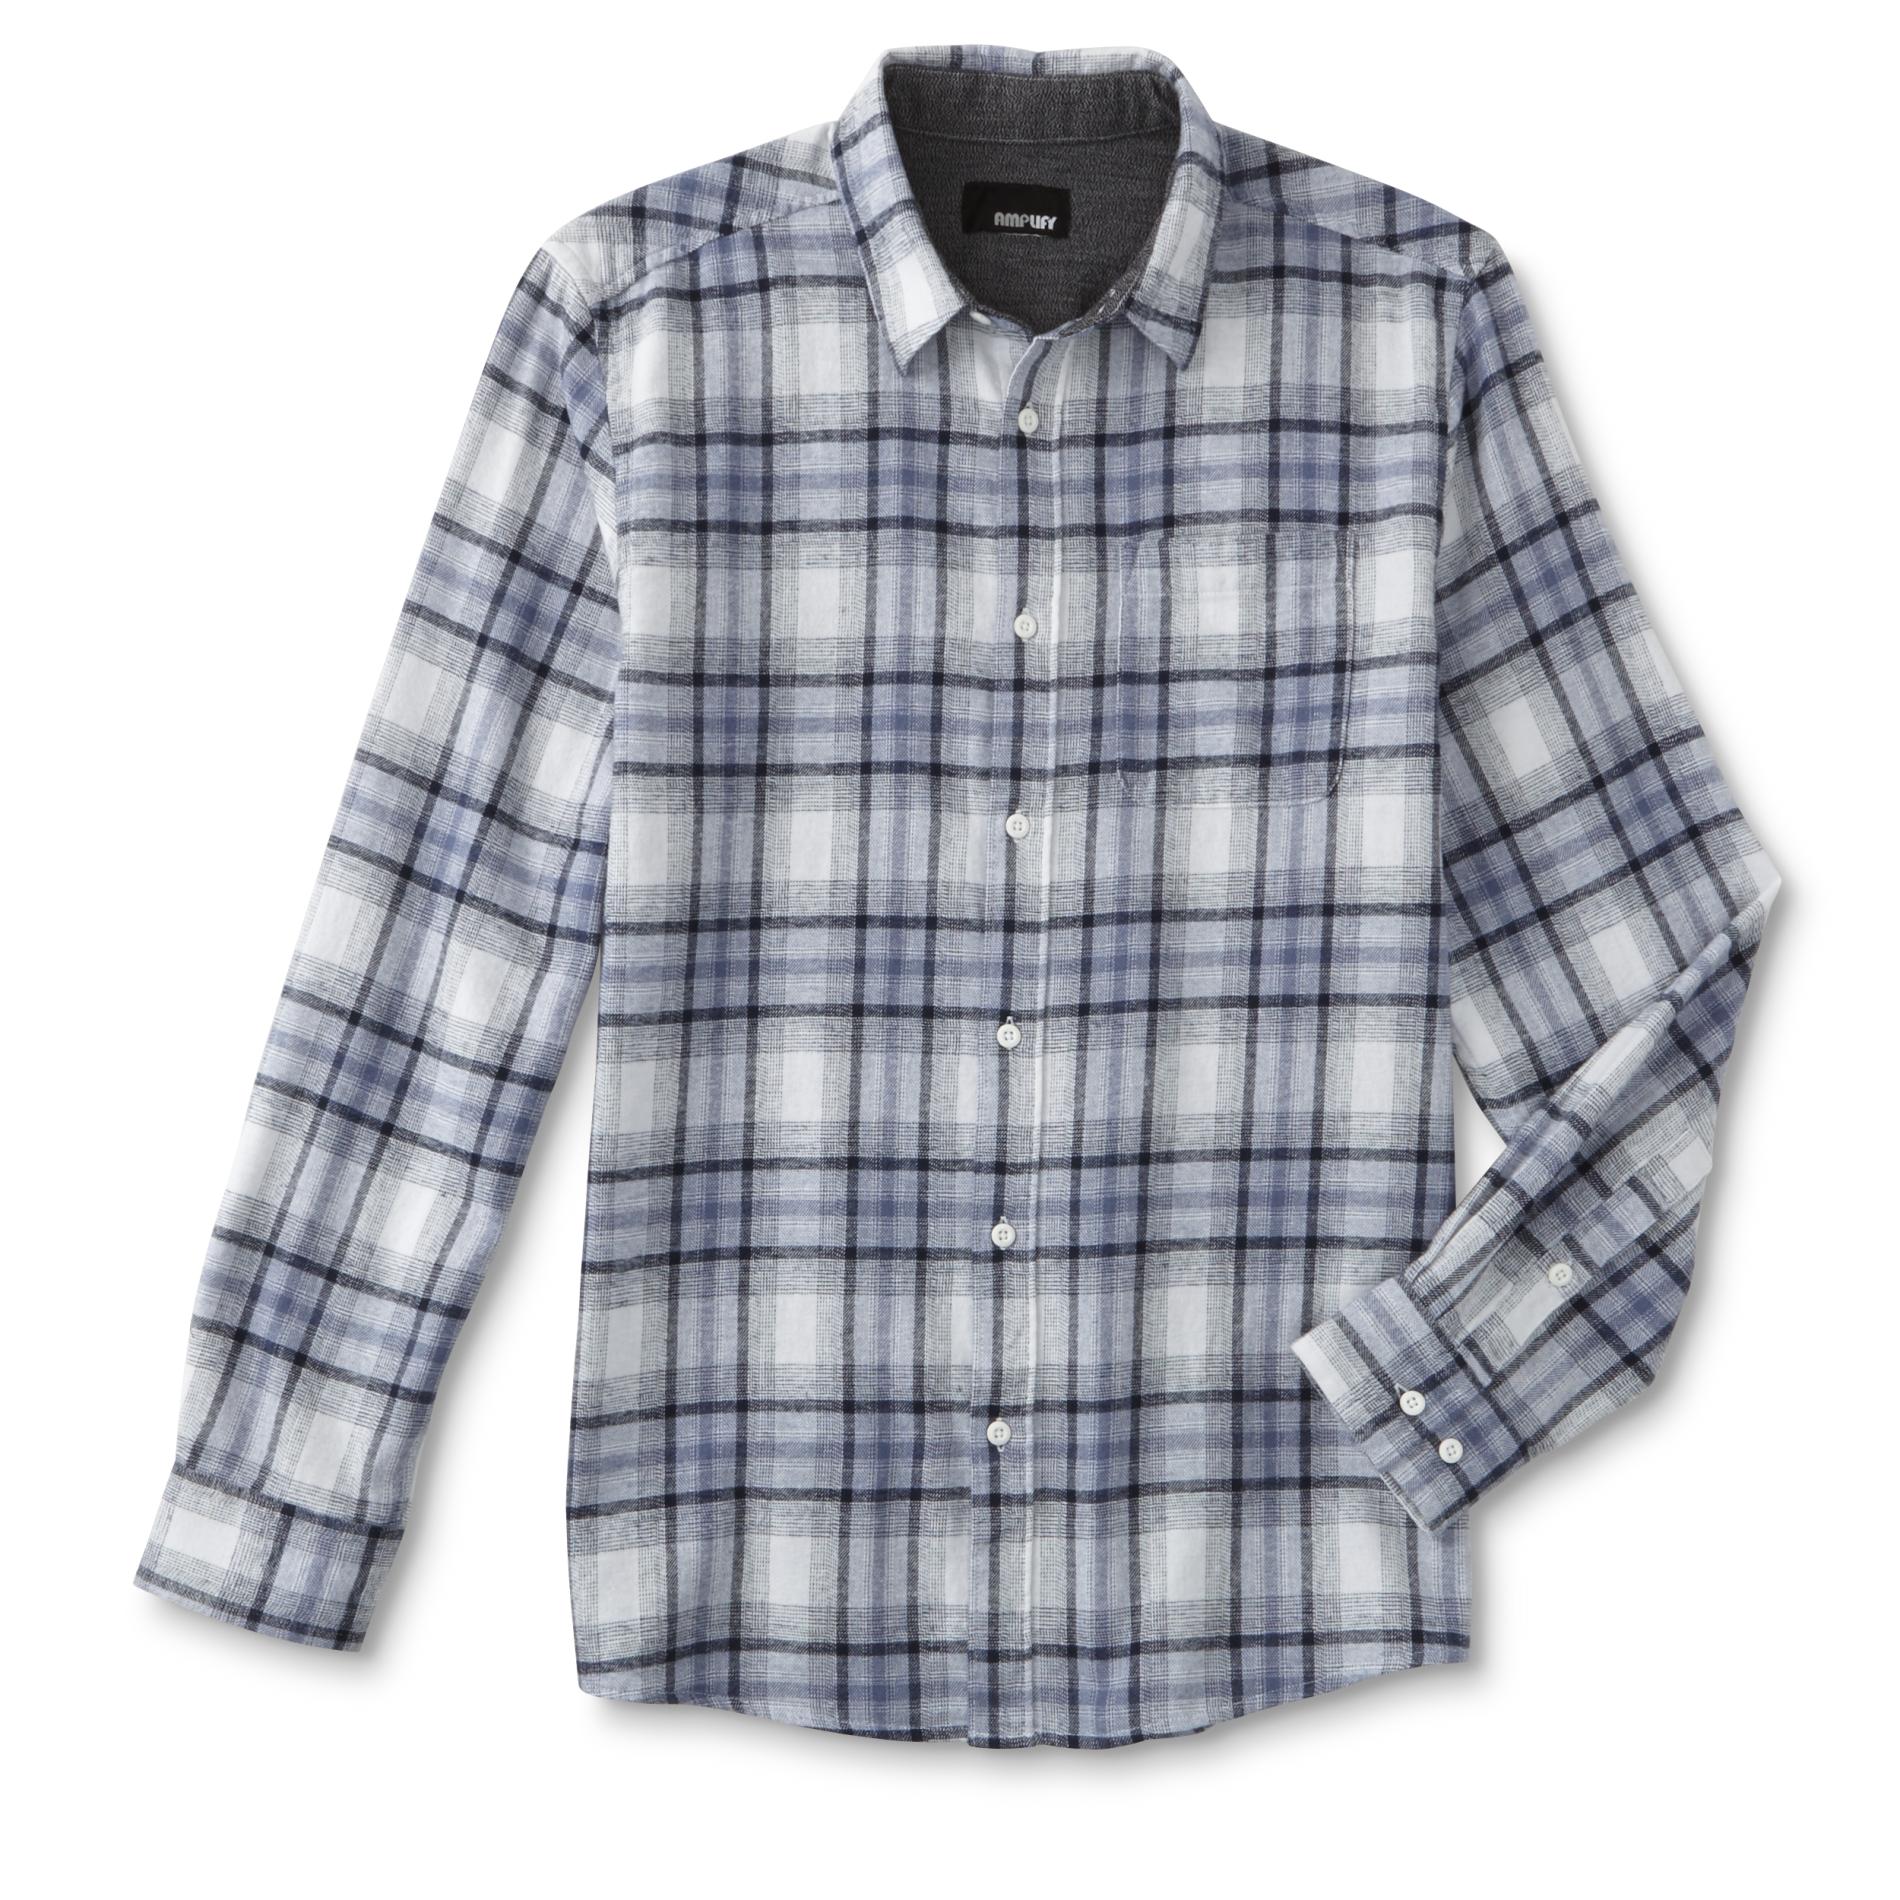 Amplify Young Men's Flannel Shirt - Plaid